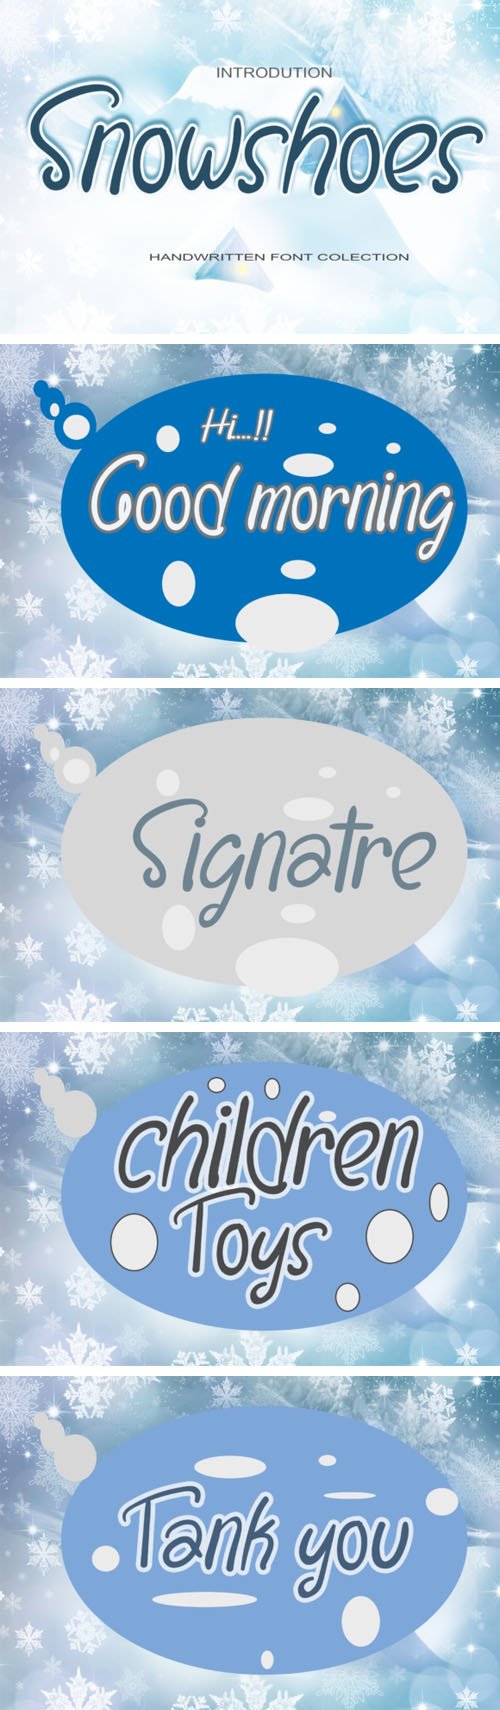 Snowshoes - Elegant Handwritten Font